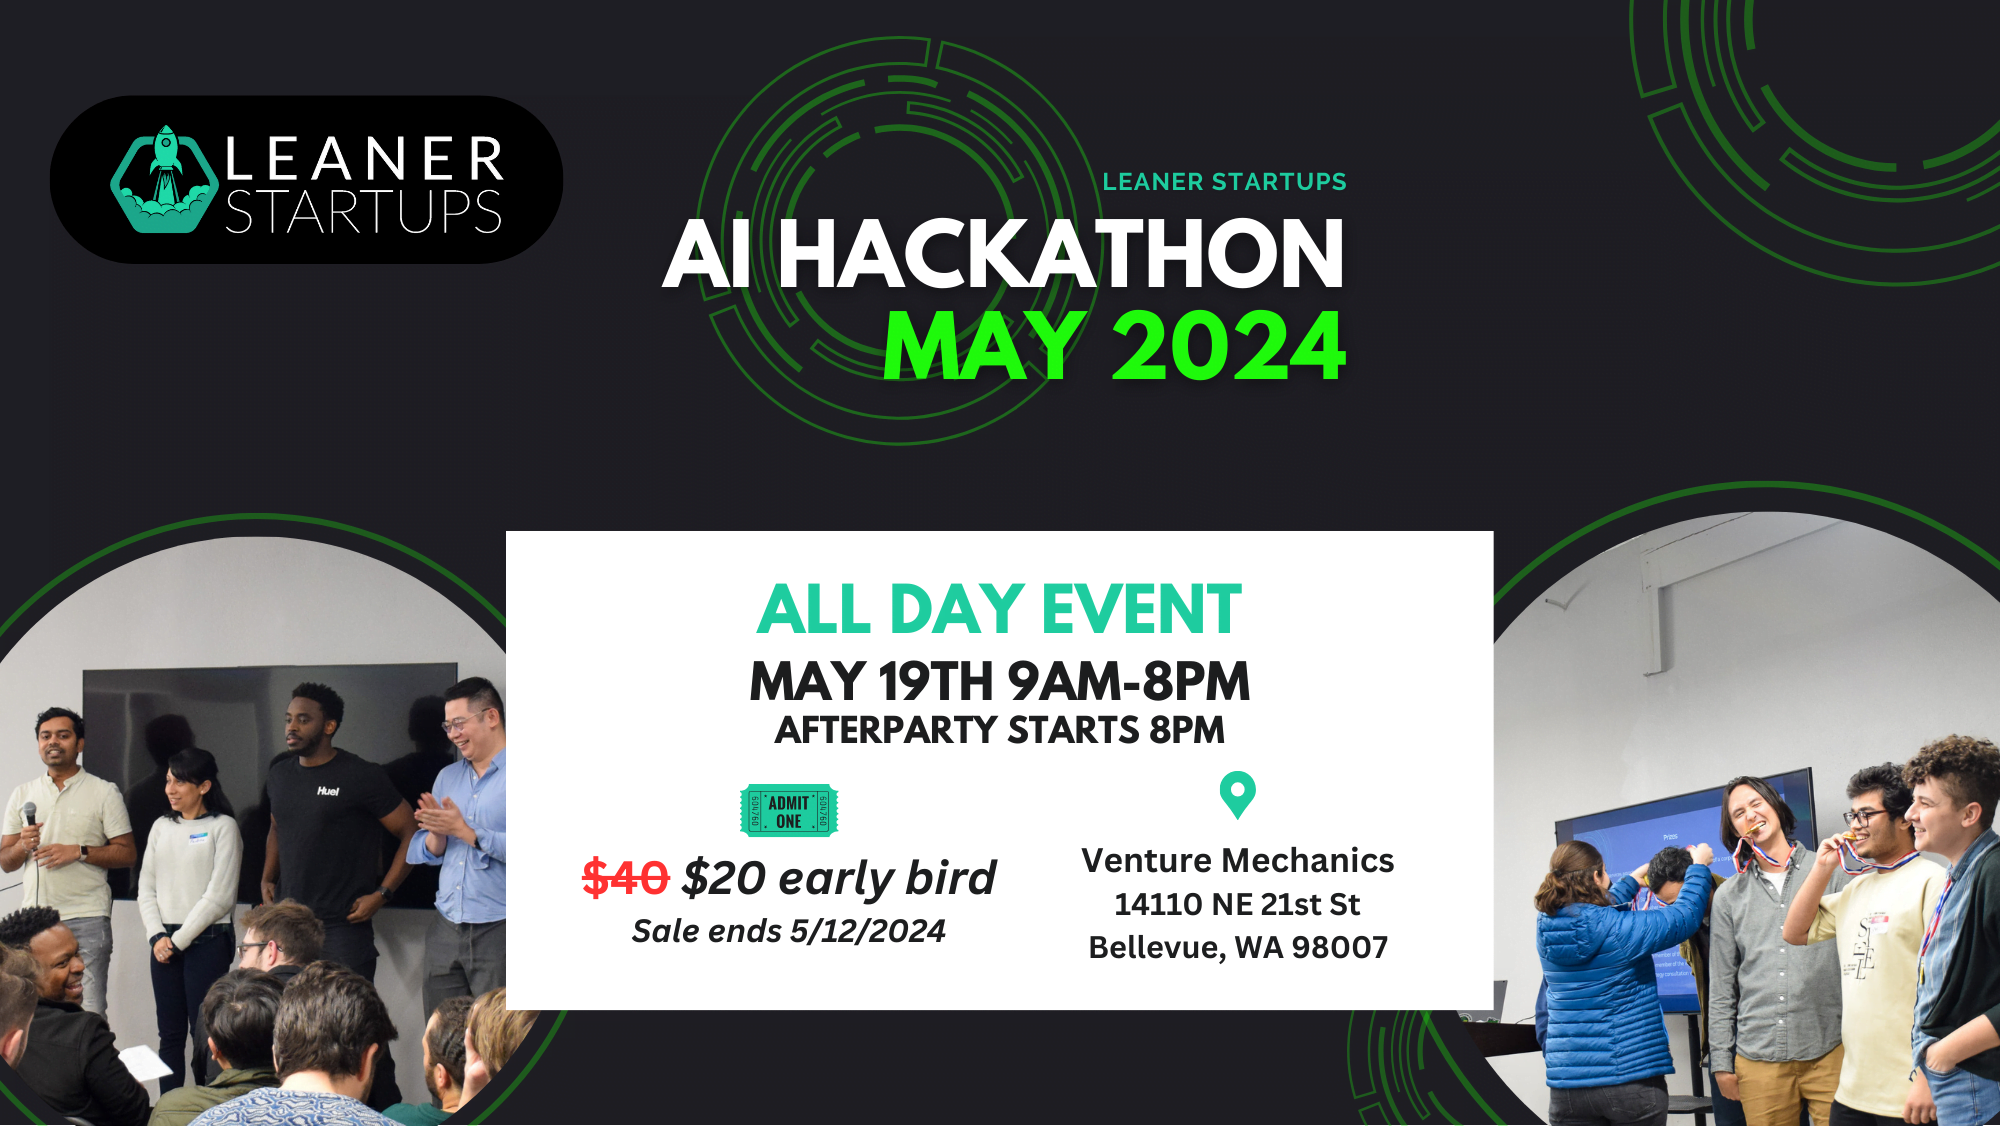 AI Hackathon Event Image May 2024